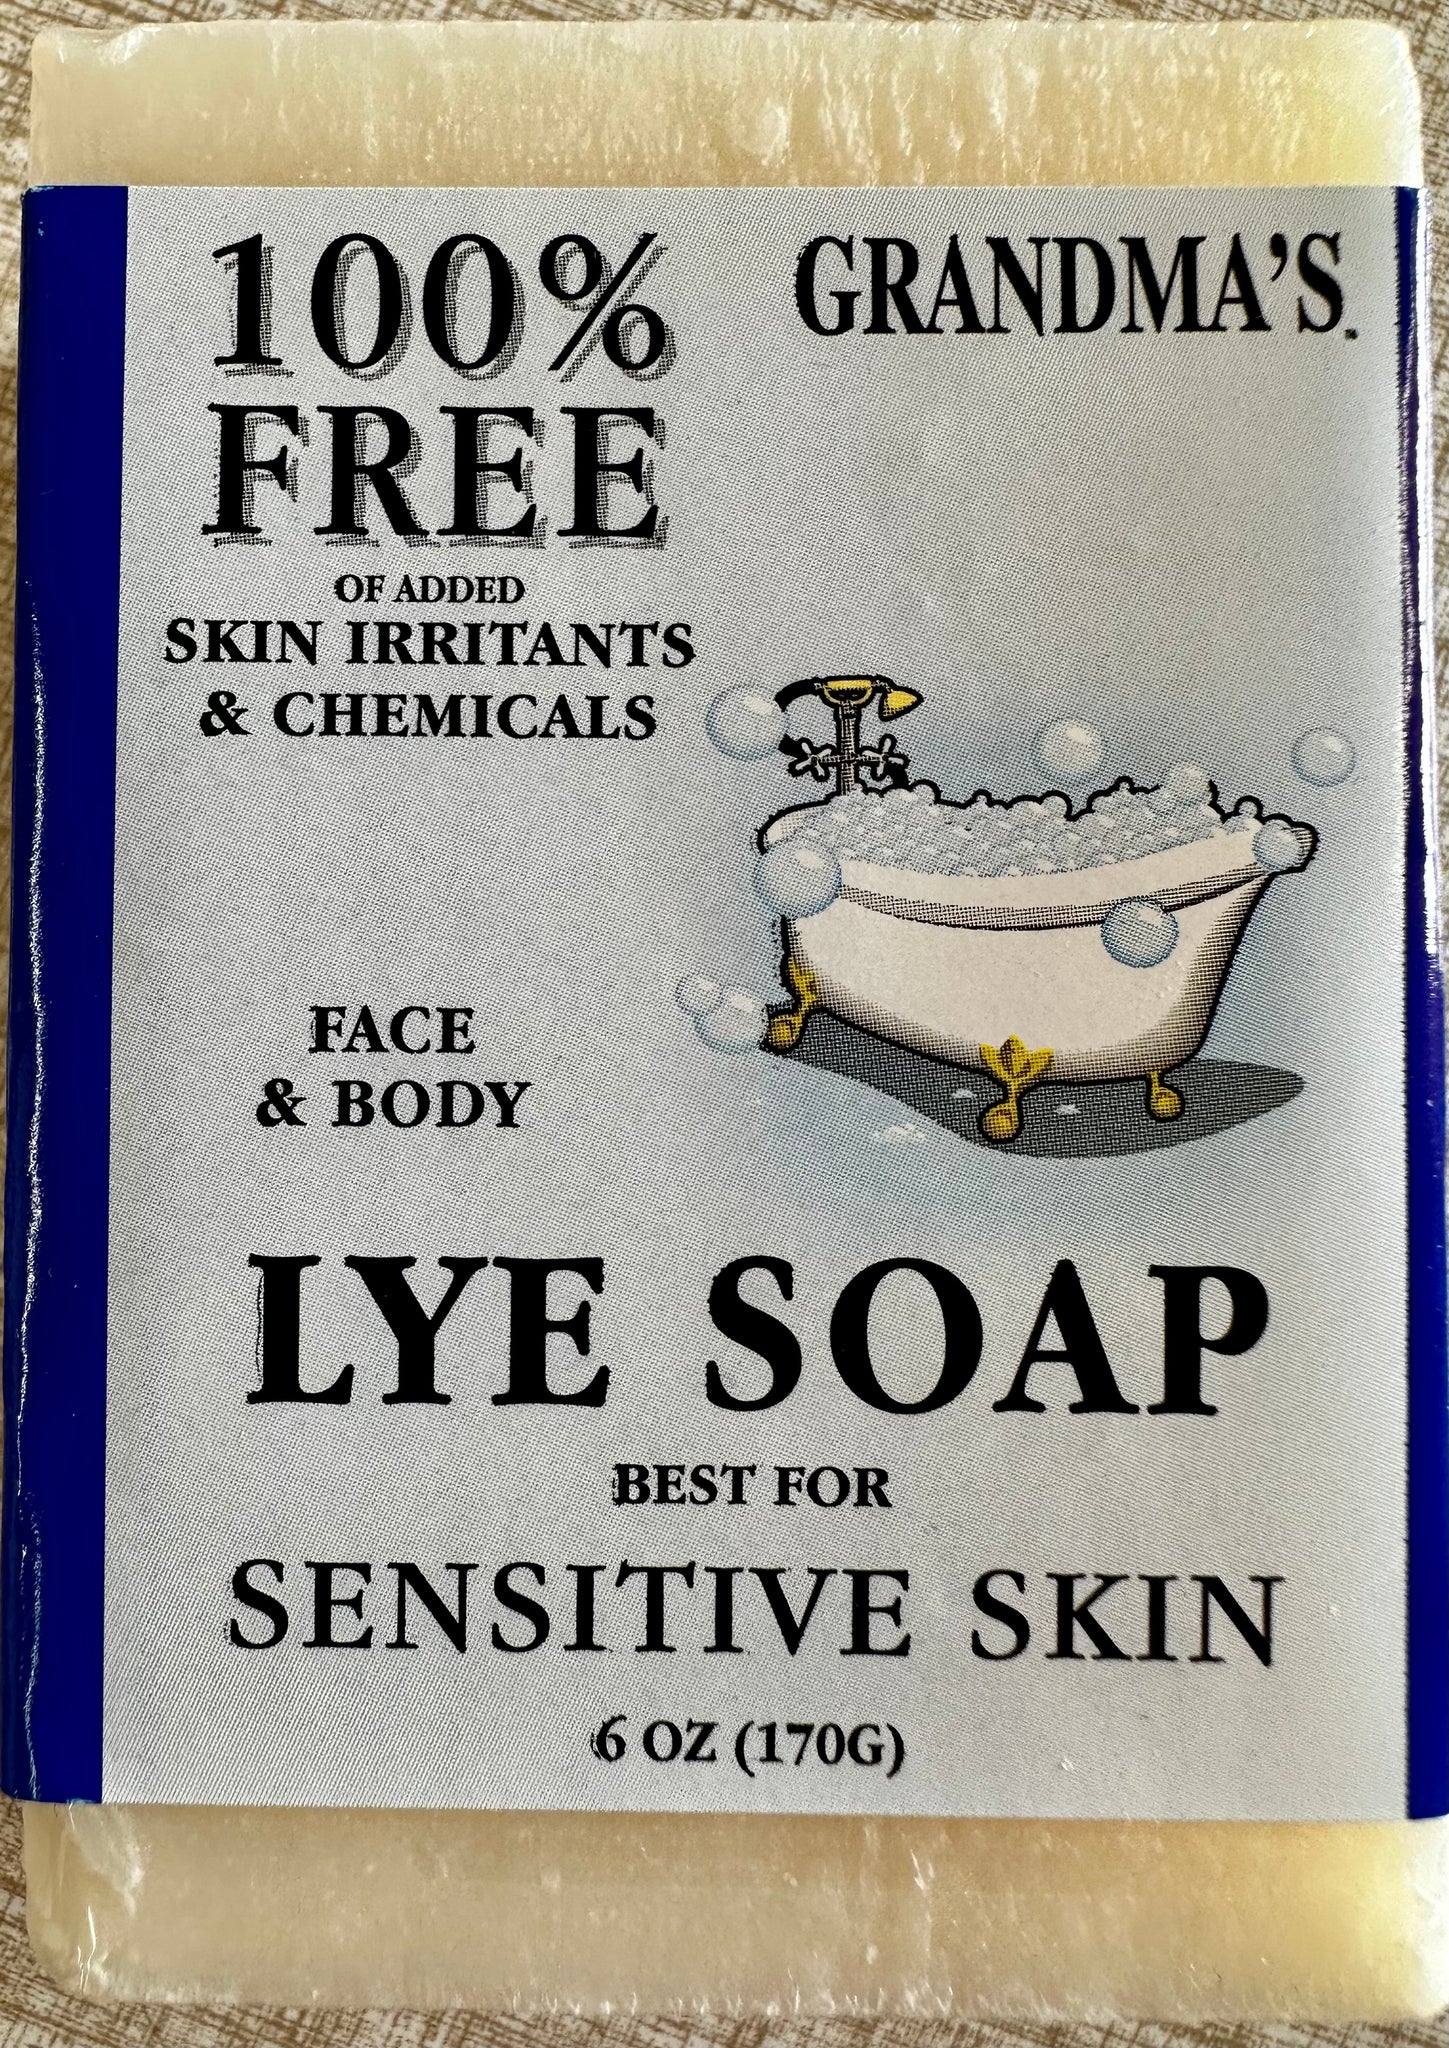 Grandma's Lye Soap